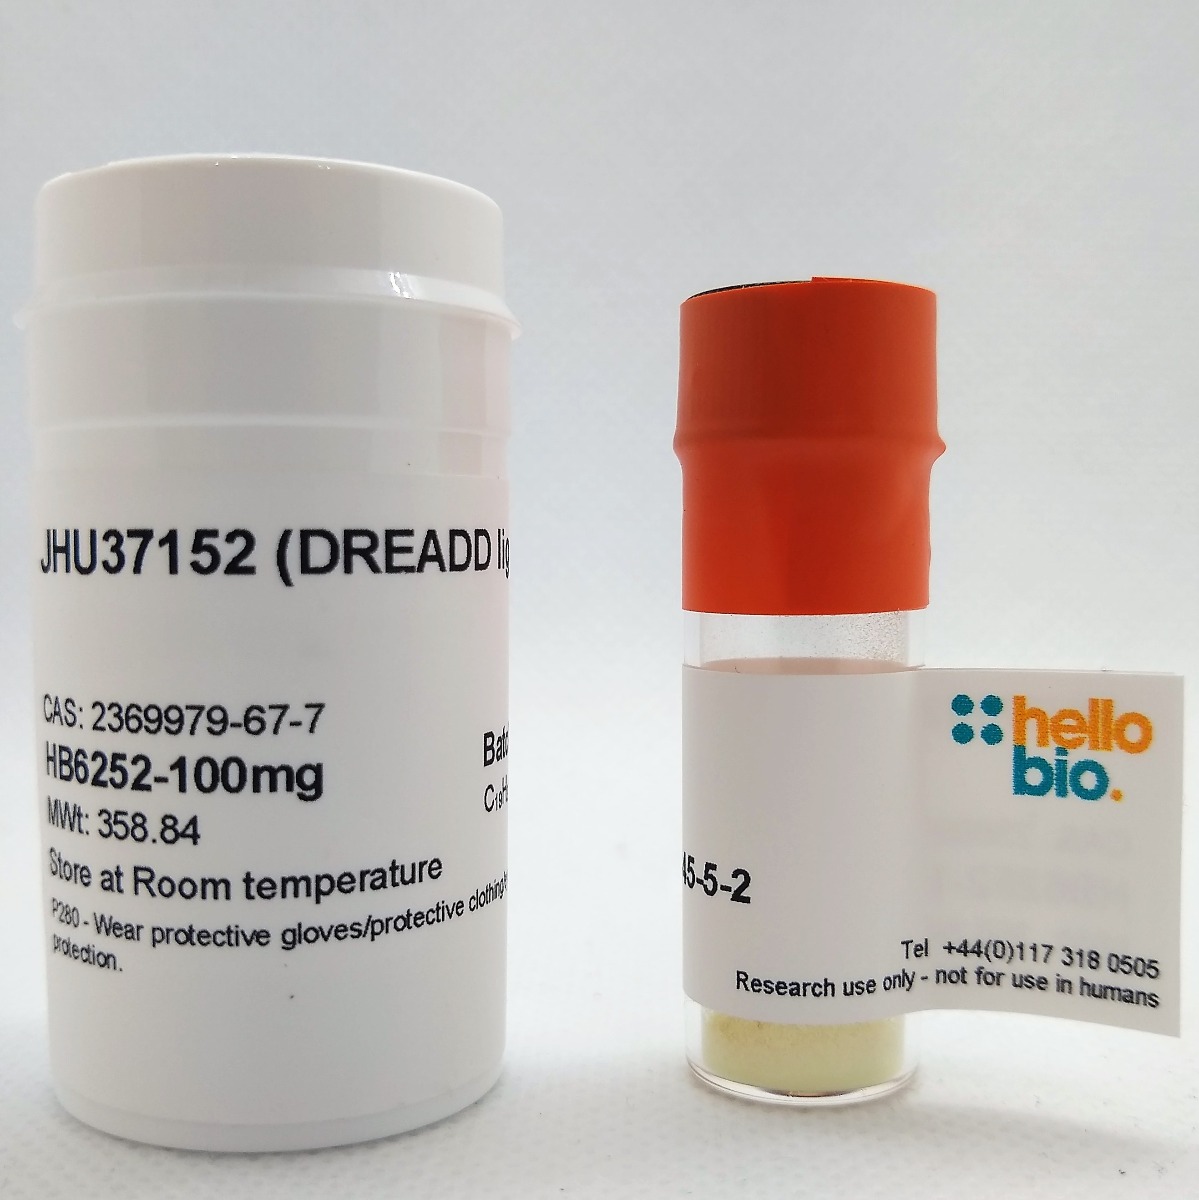 JHU37152 (DREADD ligand) product vial image | Hello Bio